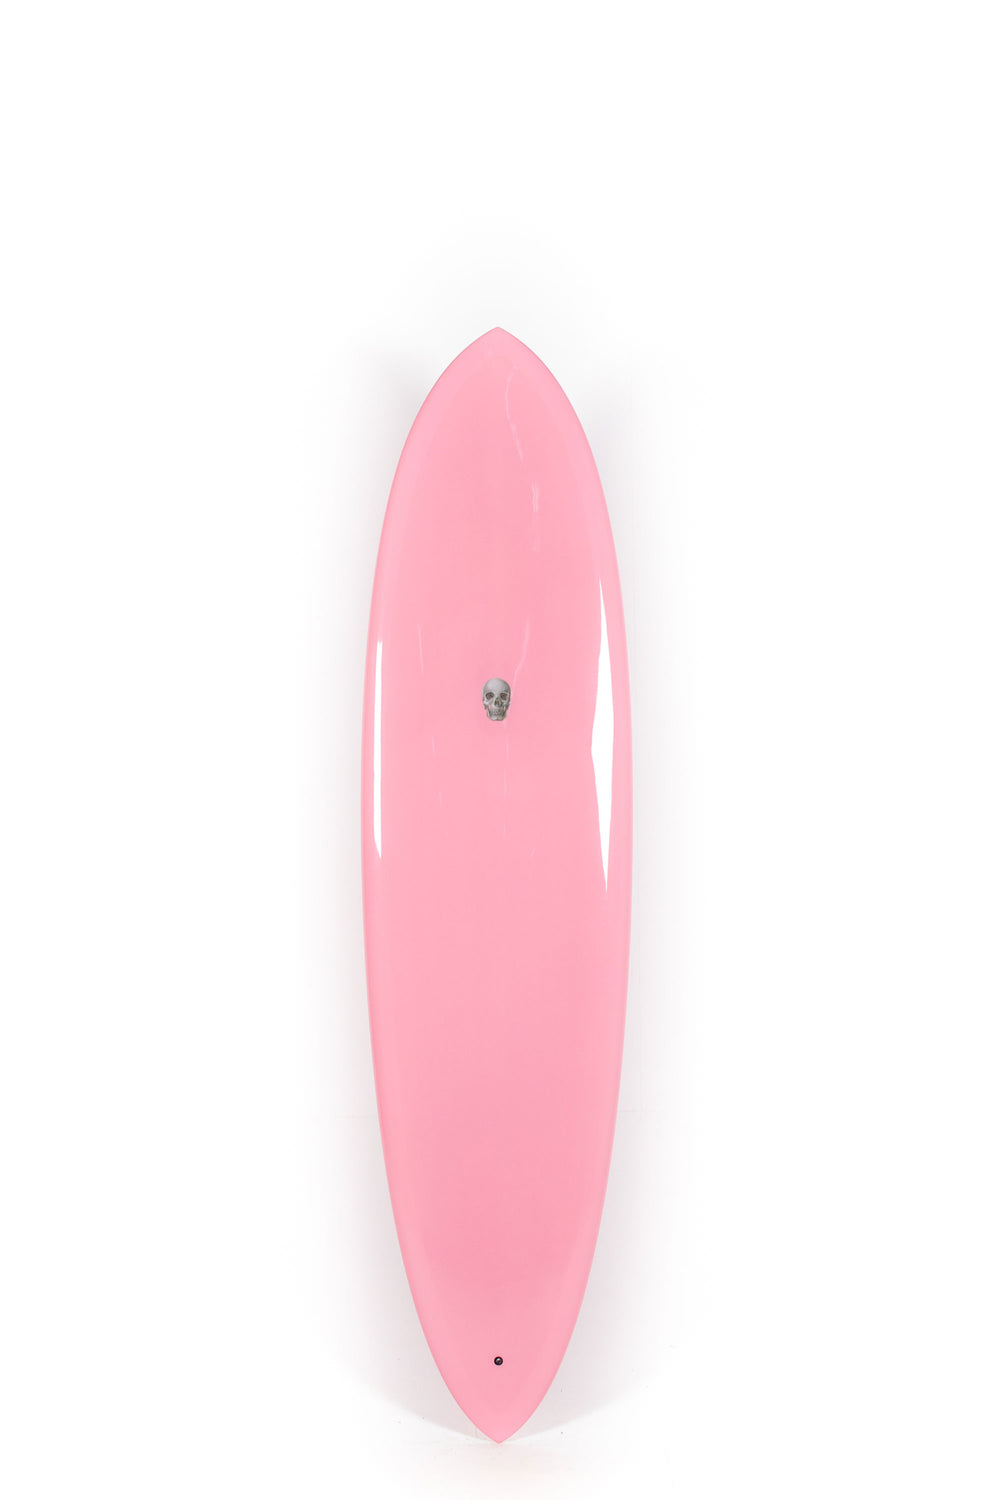 Pukas Surf Shop - Christenson Surfboards - C-BUCKET - 7'2